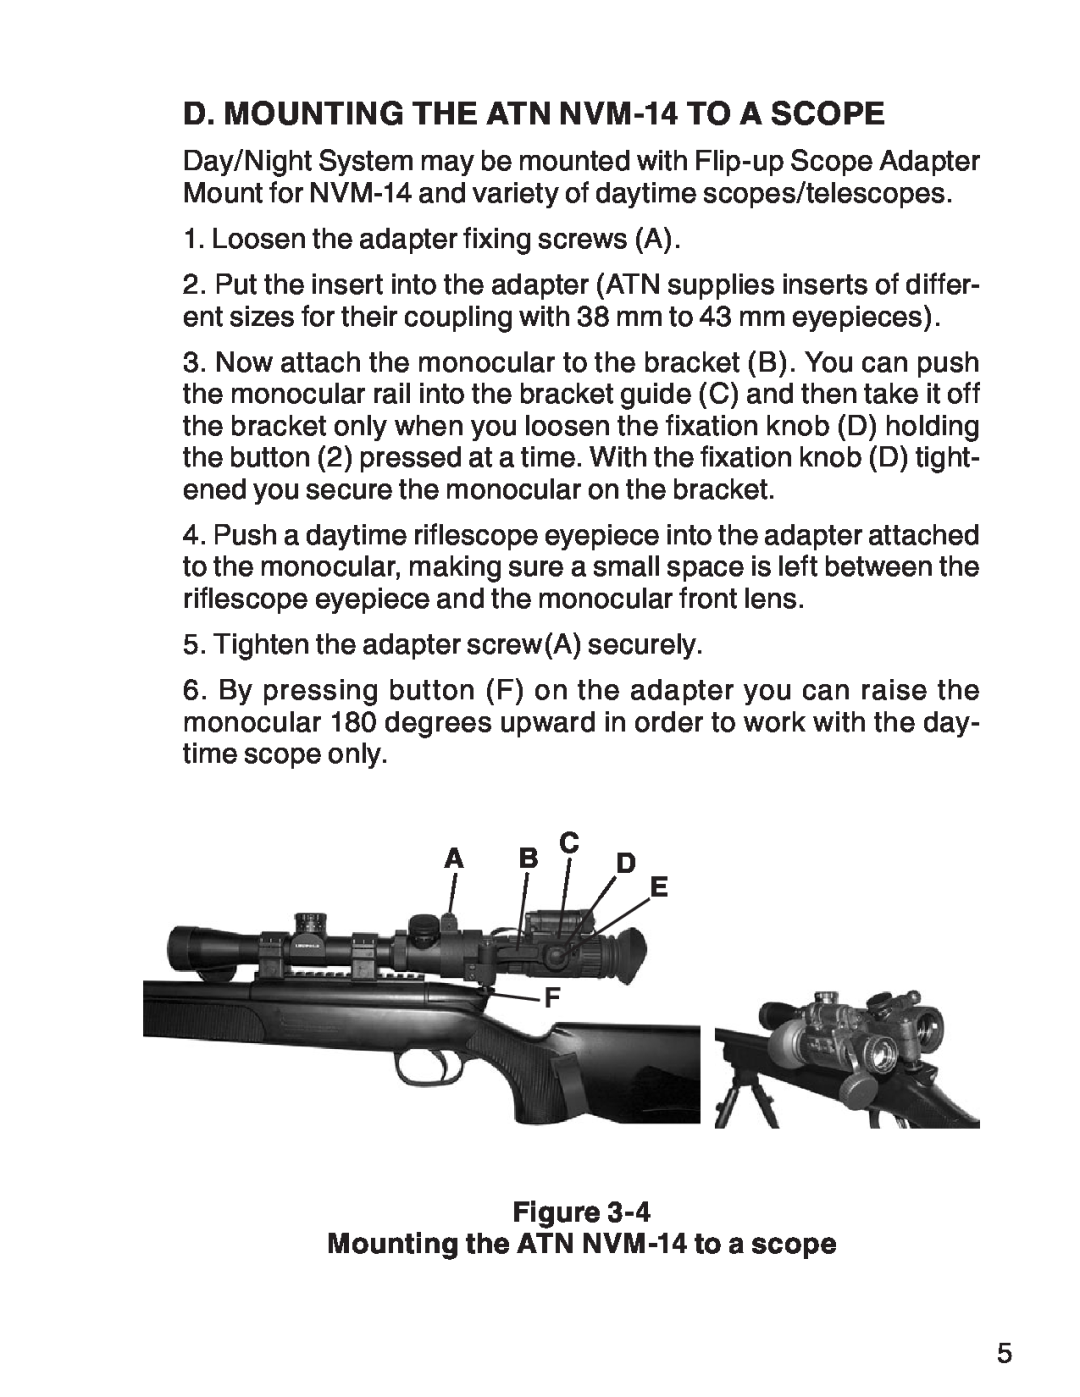 ATN 3 manual D. Mounting the ATN NVM-14 to a scope, A B C D E F 